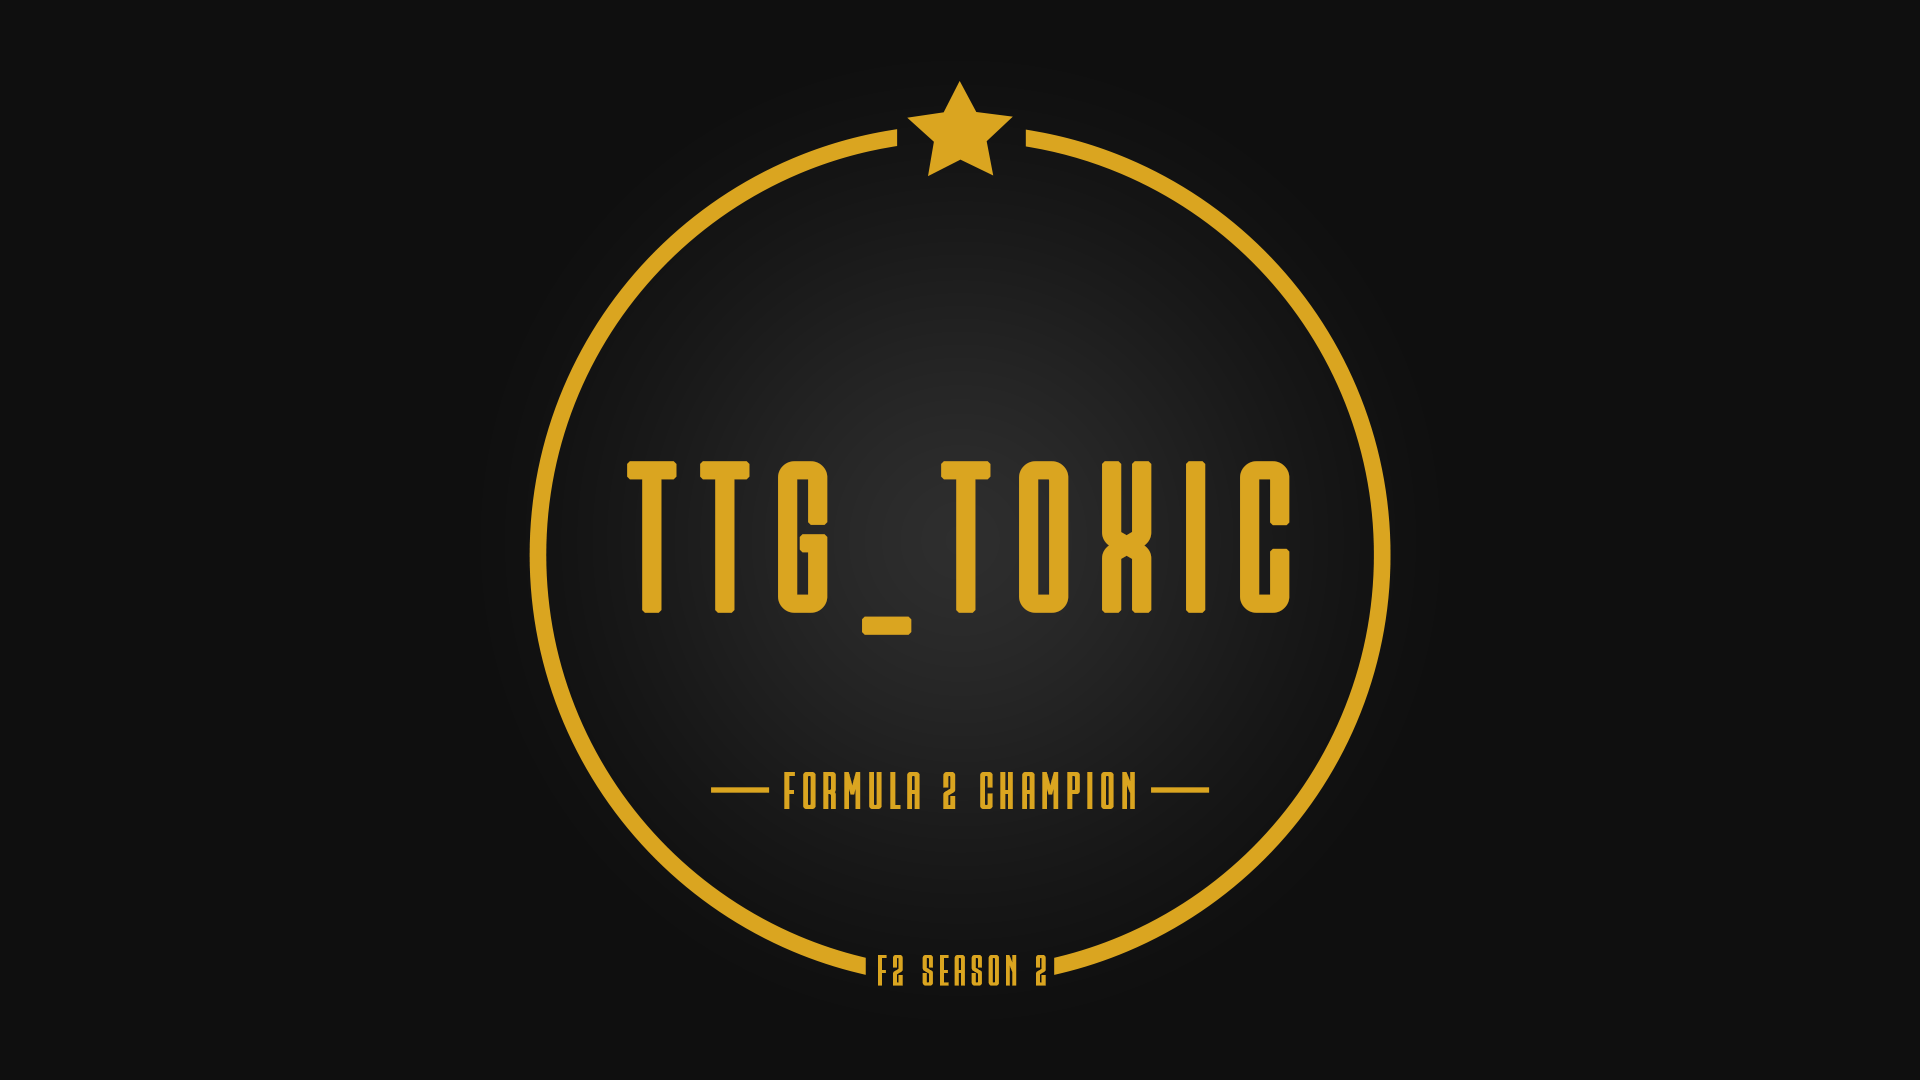 Season 2 Champion - TTG_TOXlC